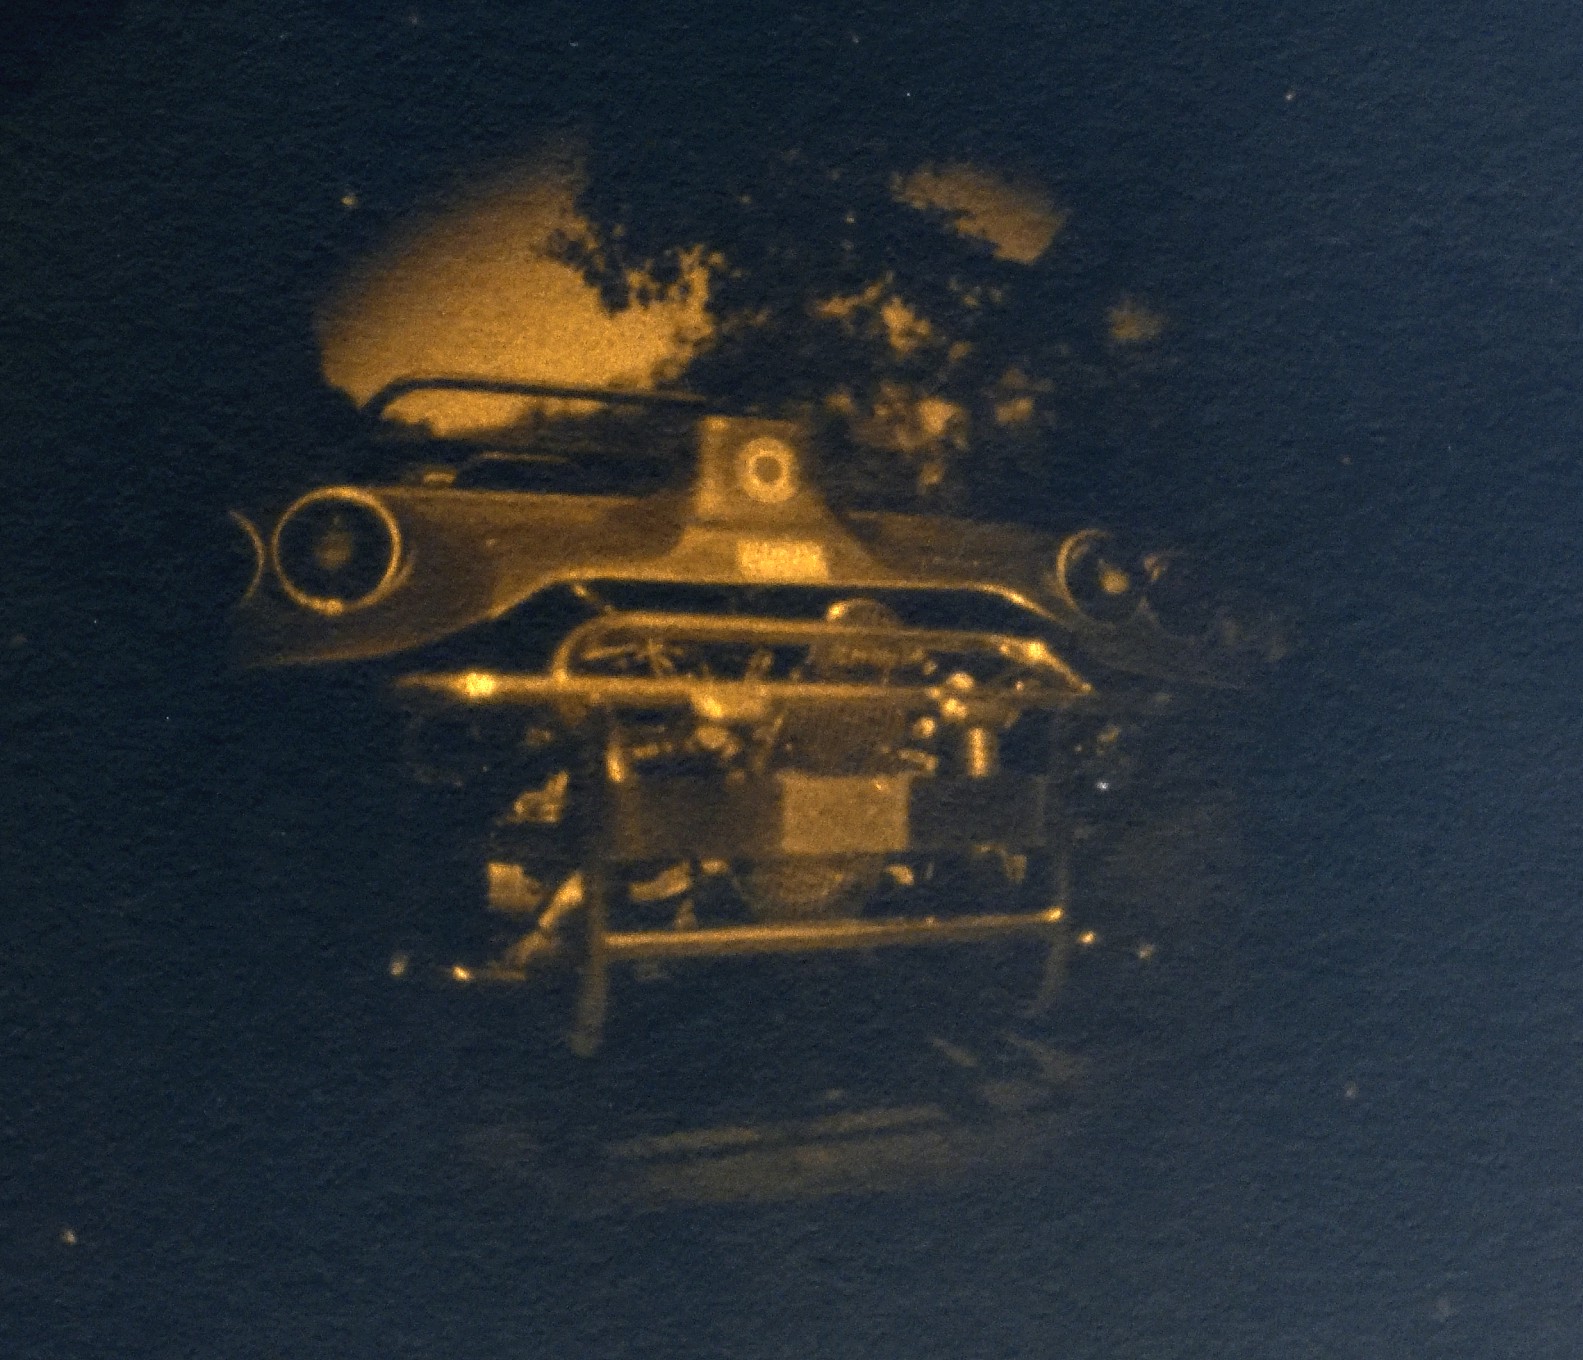 Cyanotype Photography - New Experiments